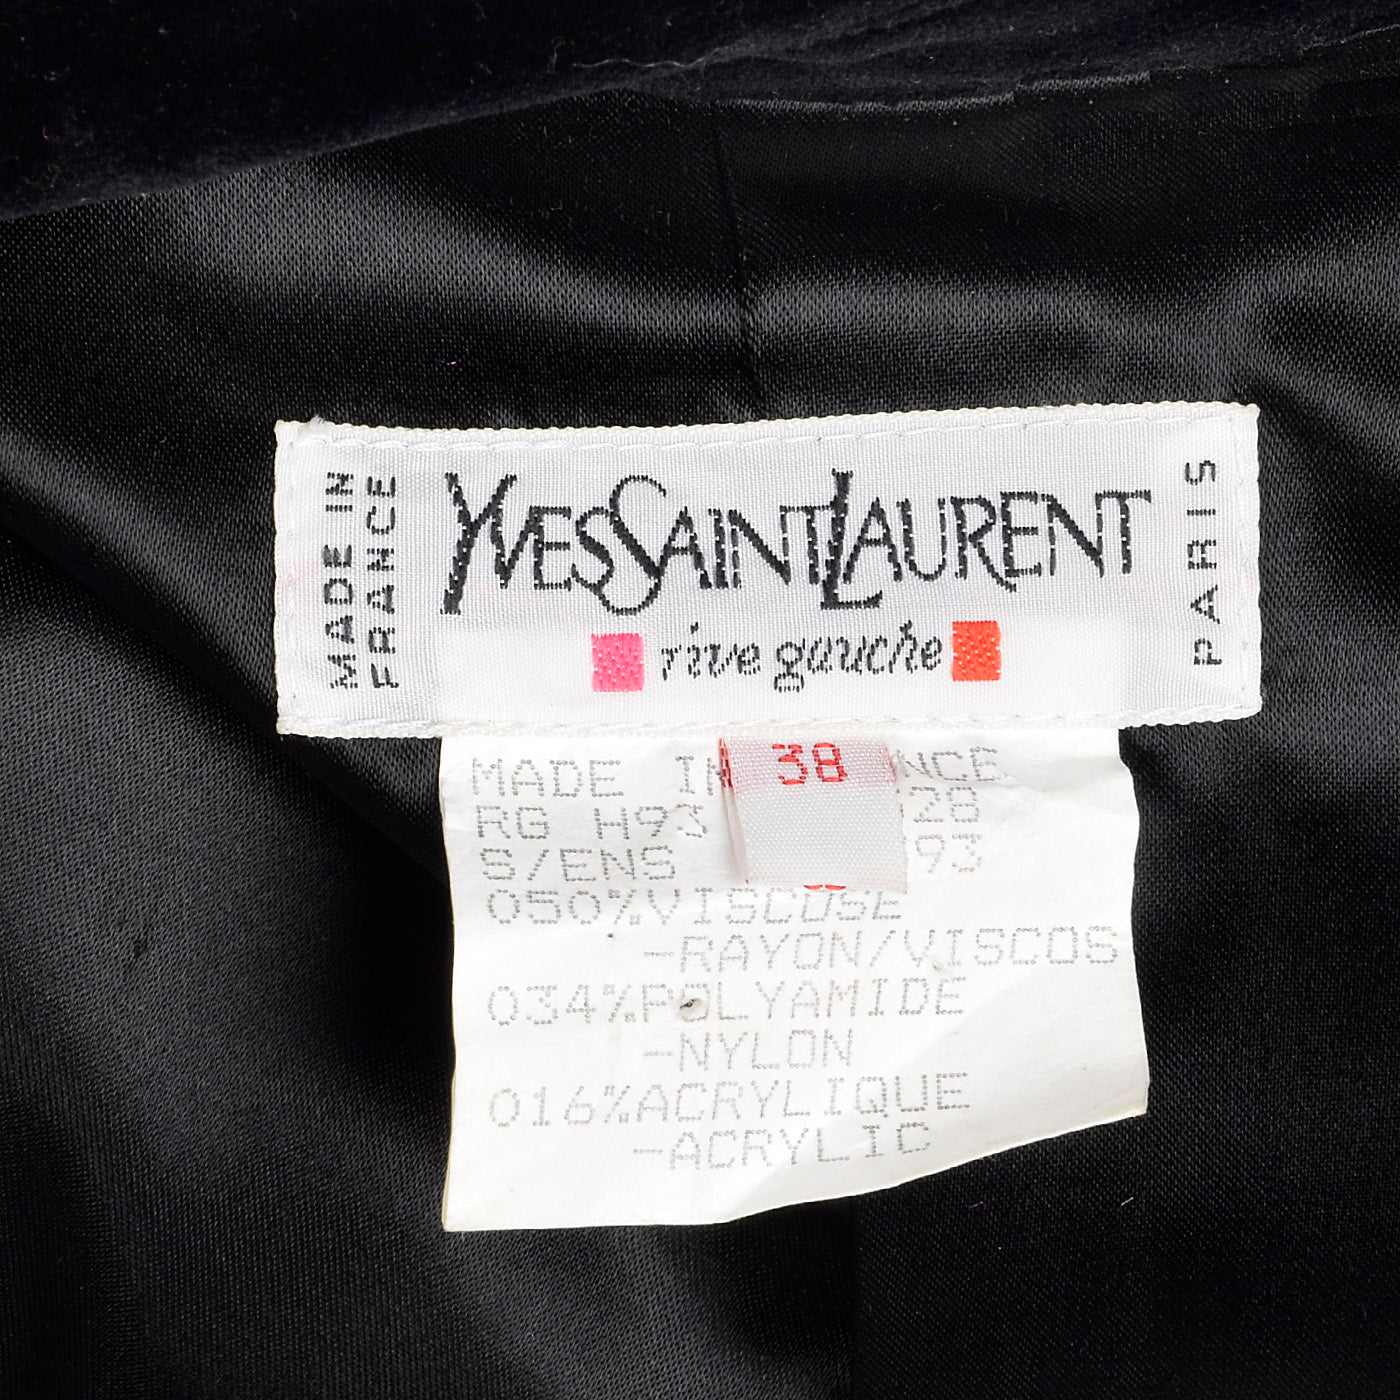 Yves Saint Laurent Rive Gauche Black & Fuchsia Striped Corduroy Skirt Suit